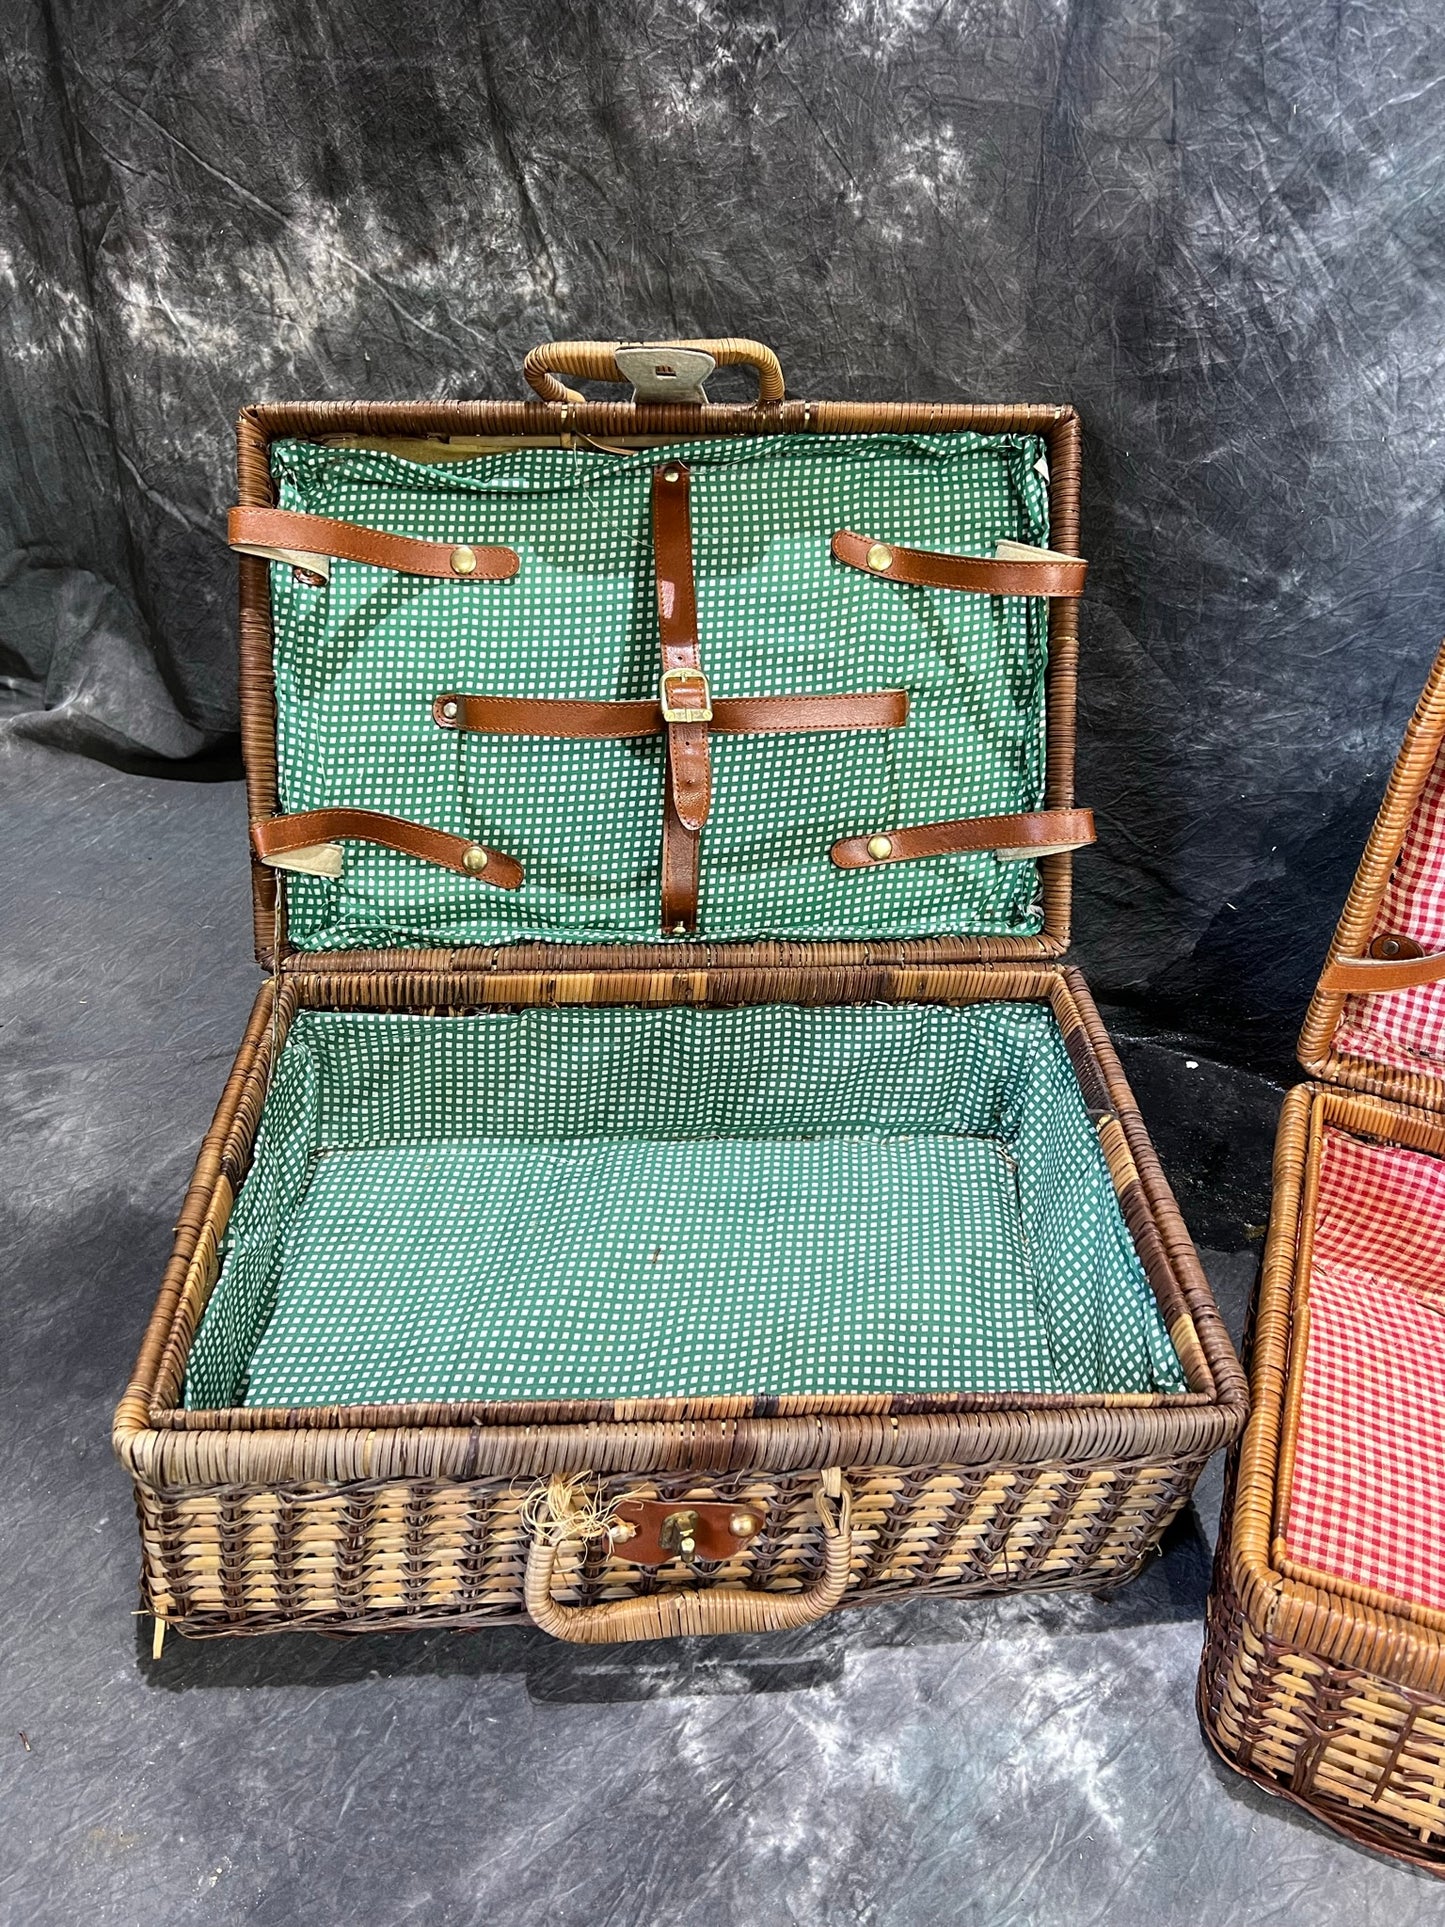 3x Vintage Wicker Picnic Baskets Job Lot Country Home Farmhouse Display Decor